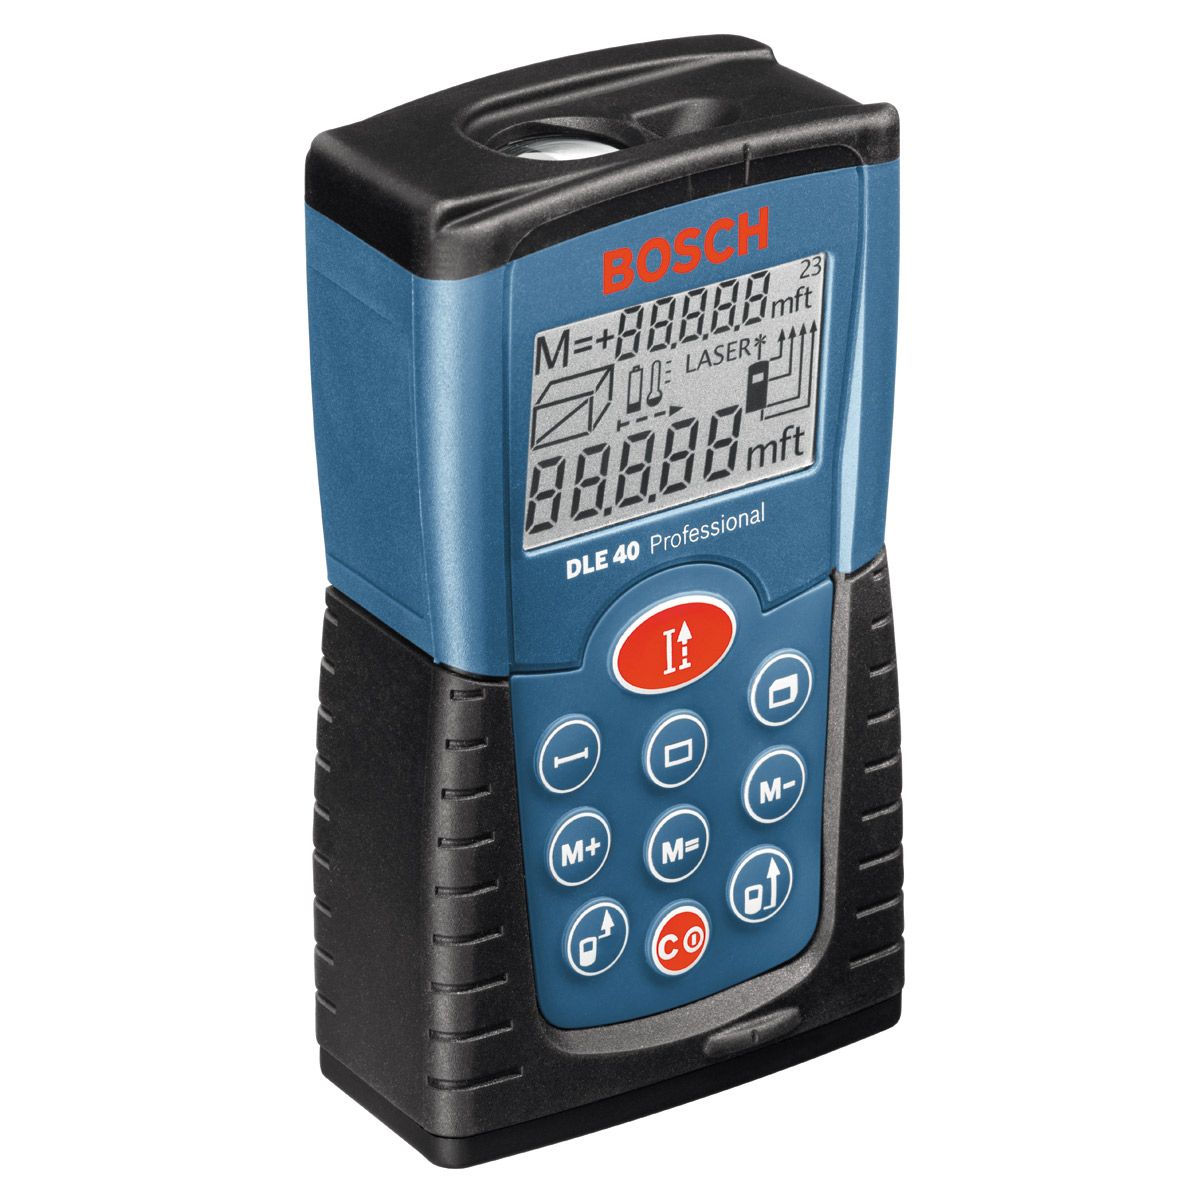 Máy đo khoảng cách laser Bosch DLE 40  giá rẻ hình ảnh 2